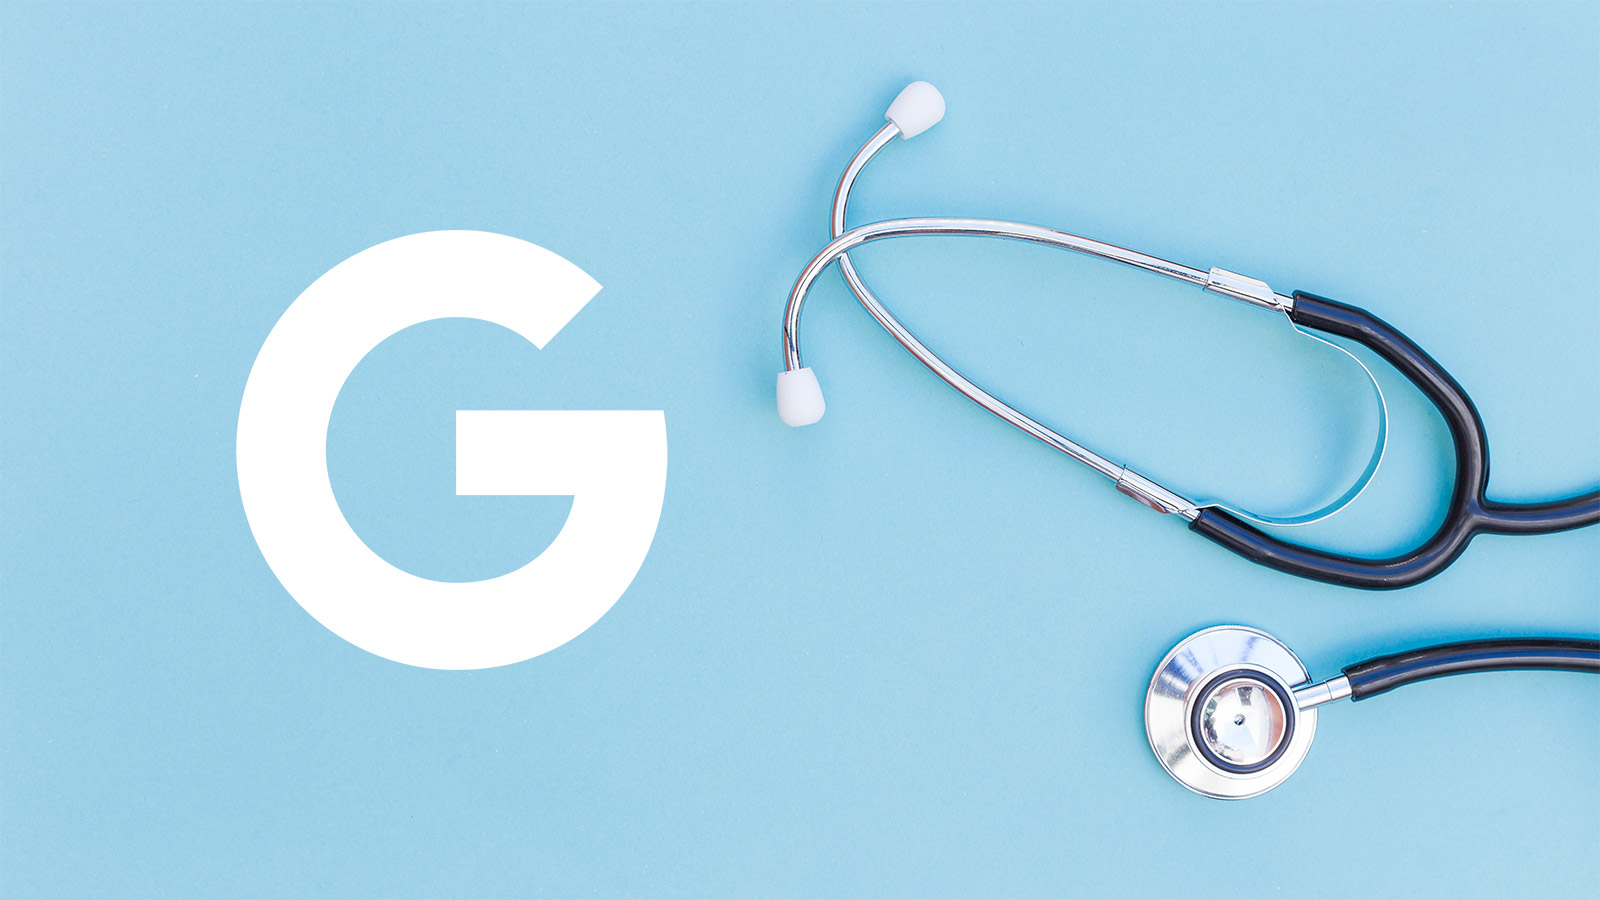 Google G and Stethoscope